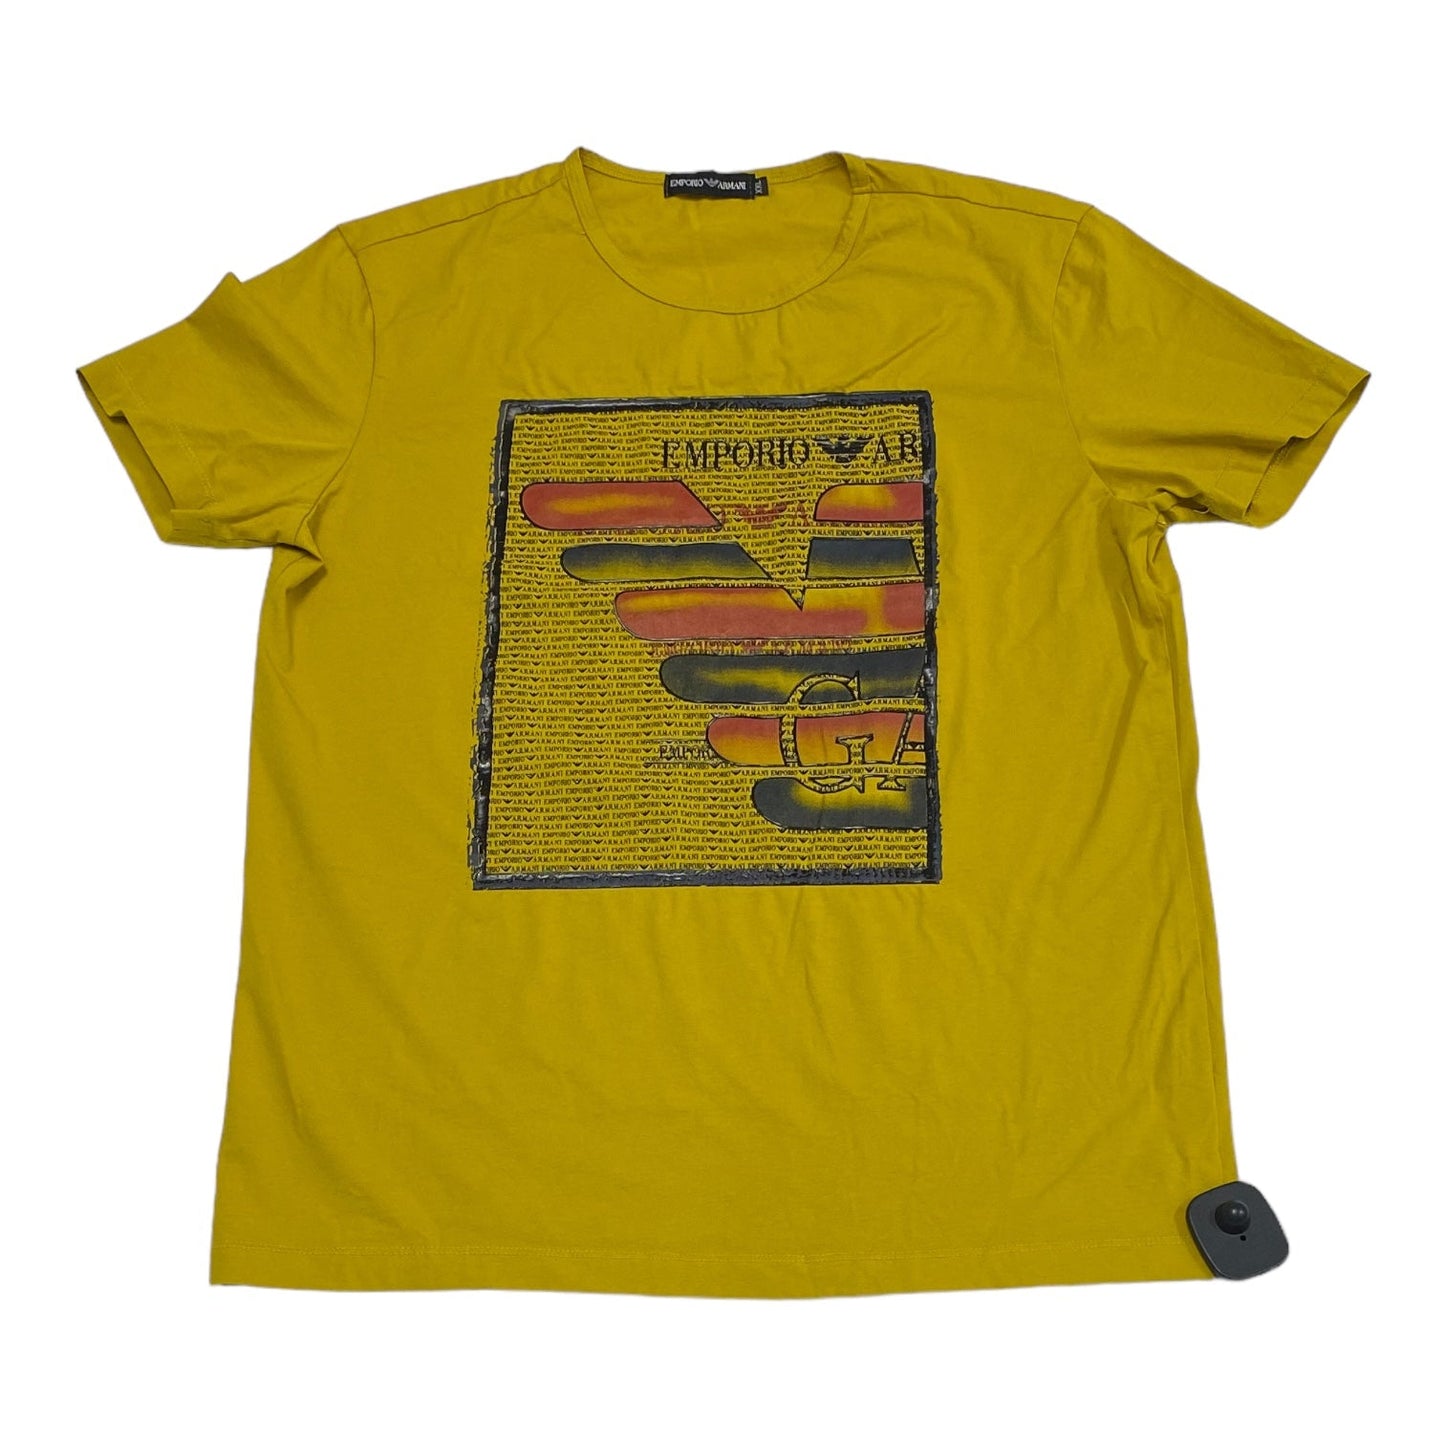 Yellow Top Short Sleeve Emporio Armani, Size Xxl